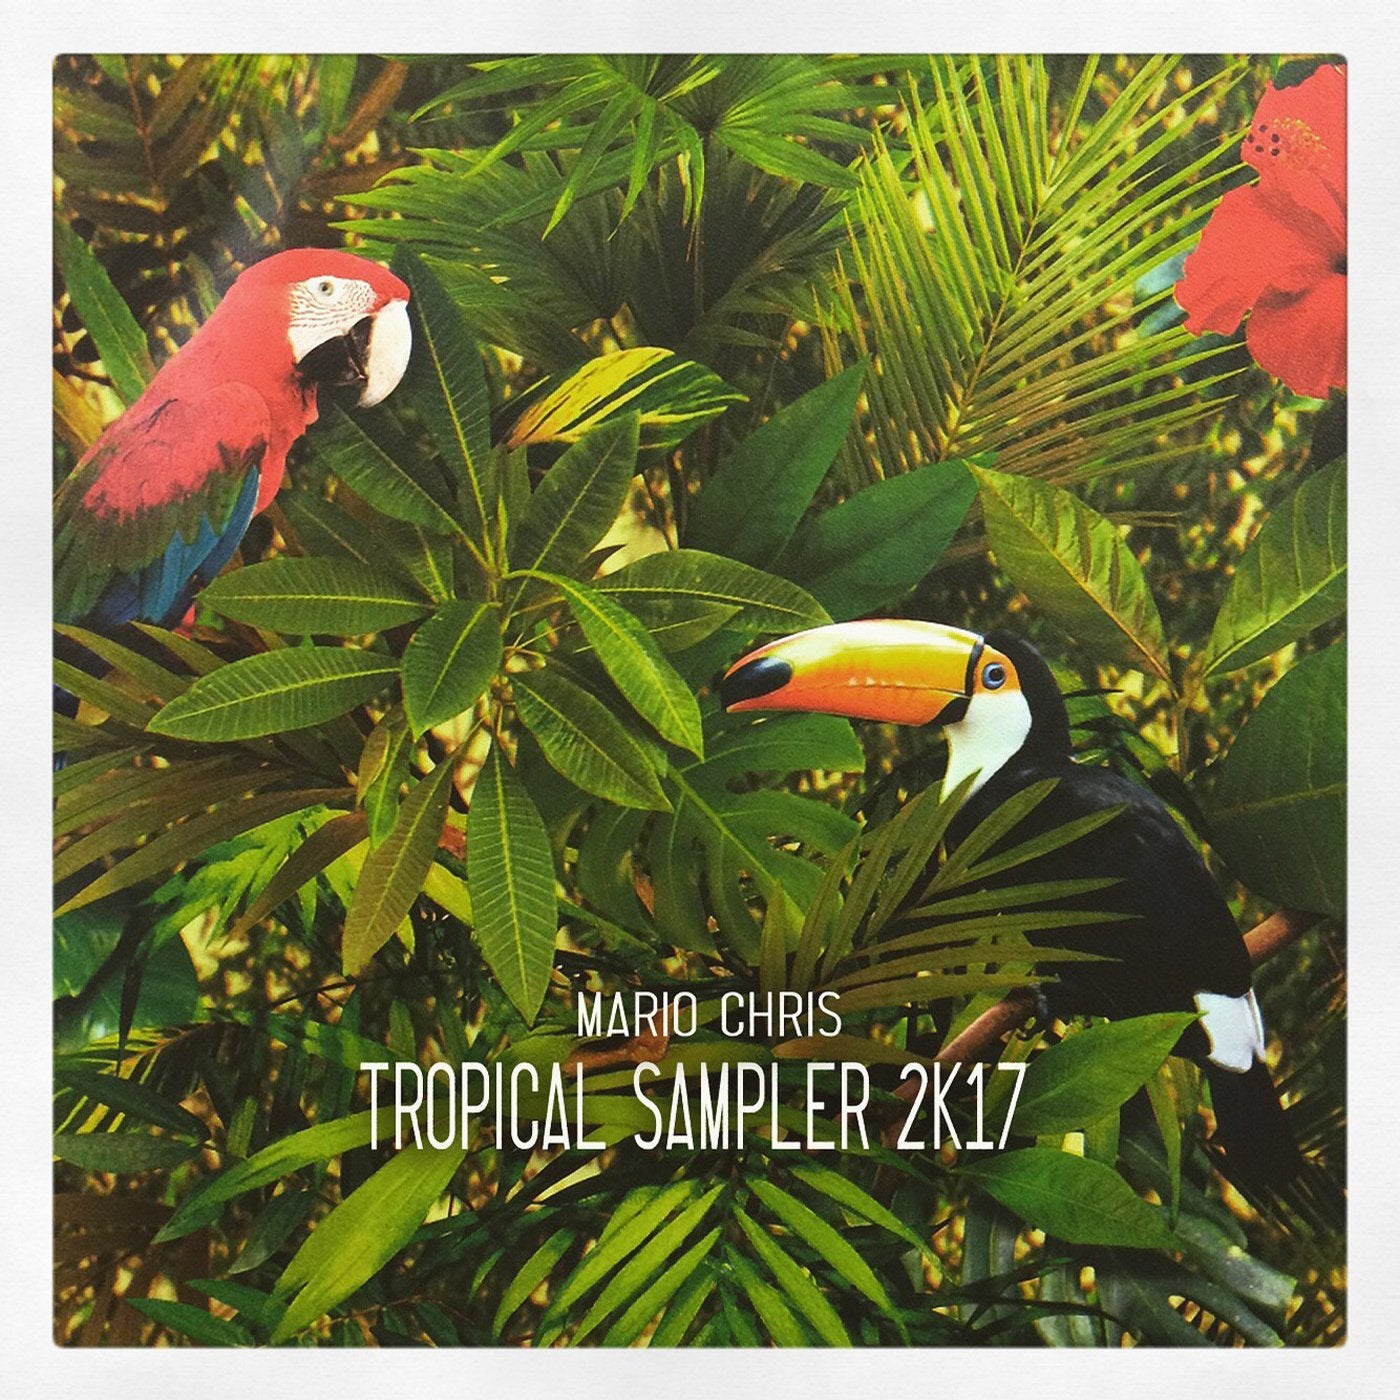 Tropical Sampler 2k17